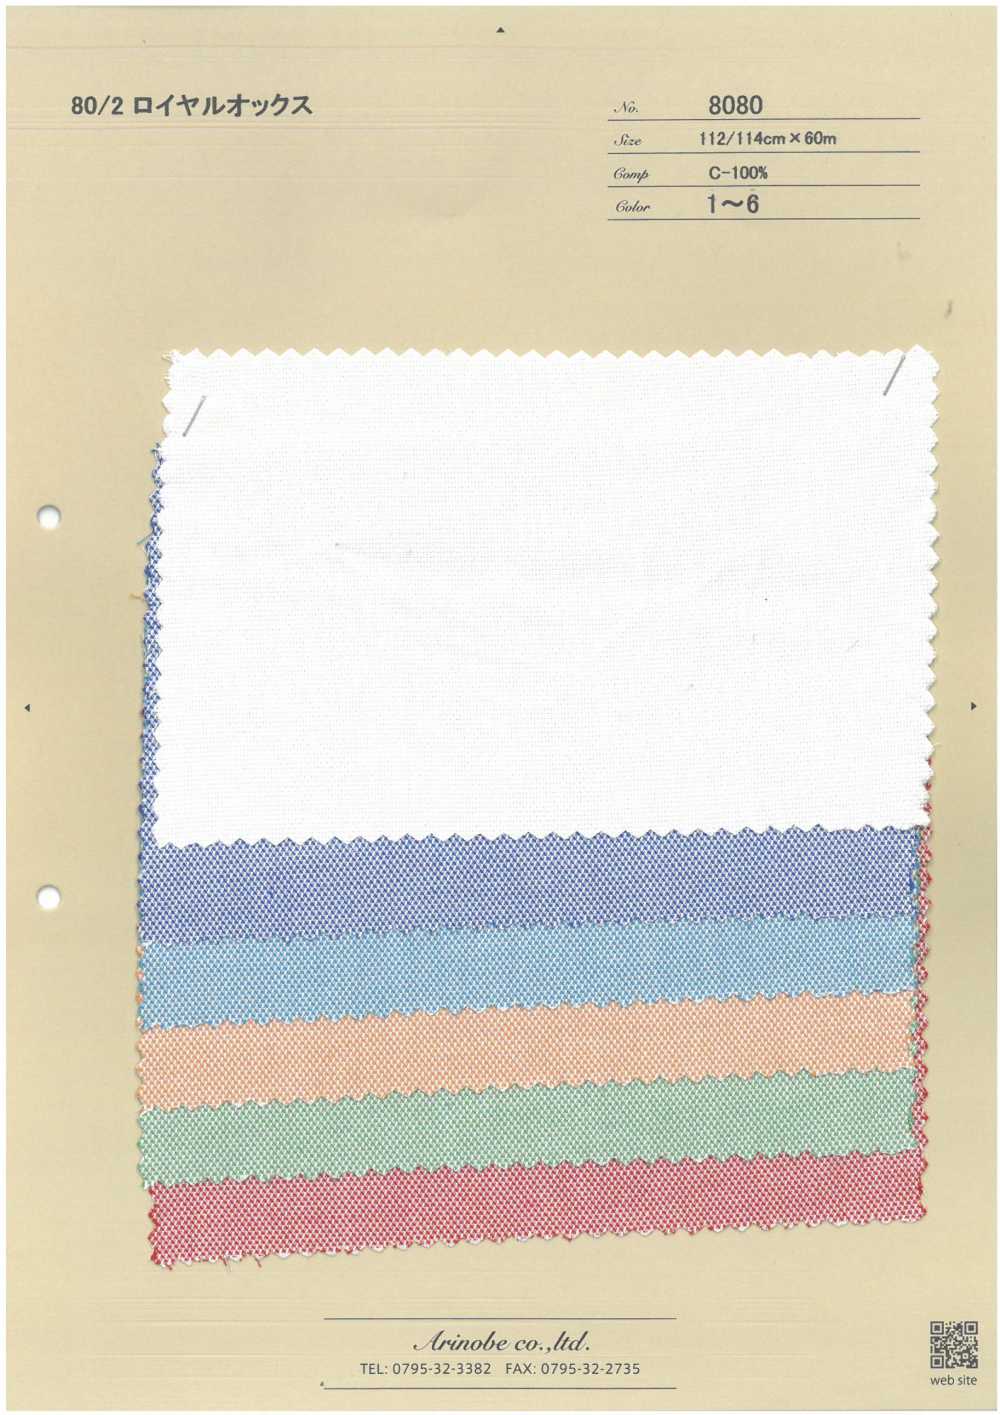 8080 Royal Oxford[Textile / Fabric] ARINOBE CO., LTD.